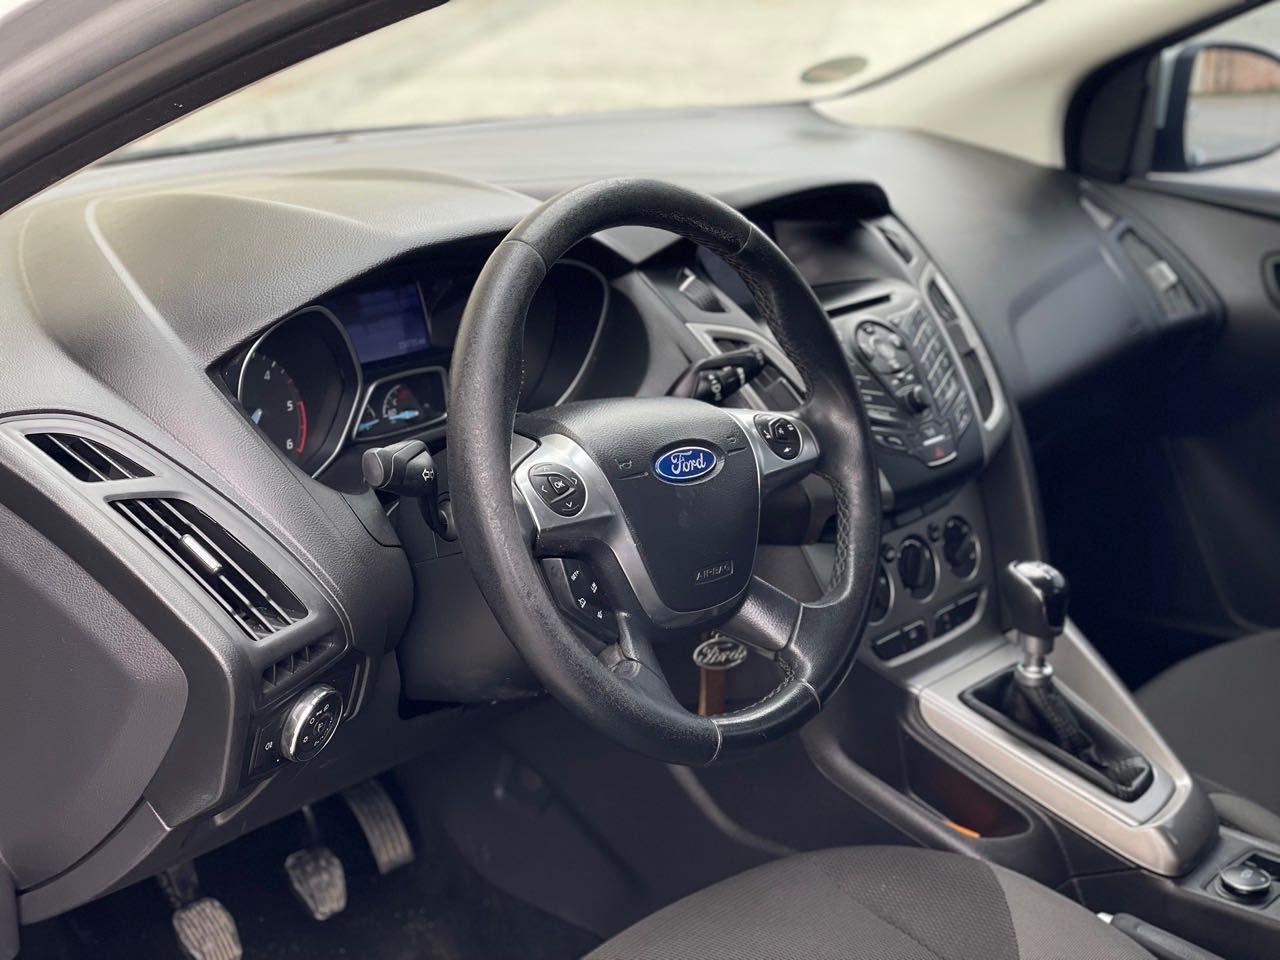 Ford Focus 1.6 дизель